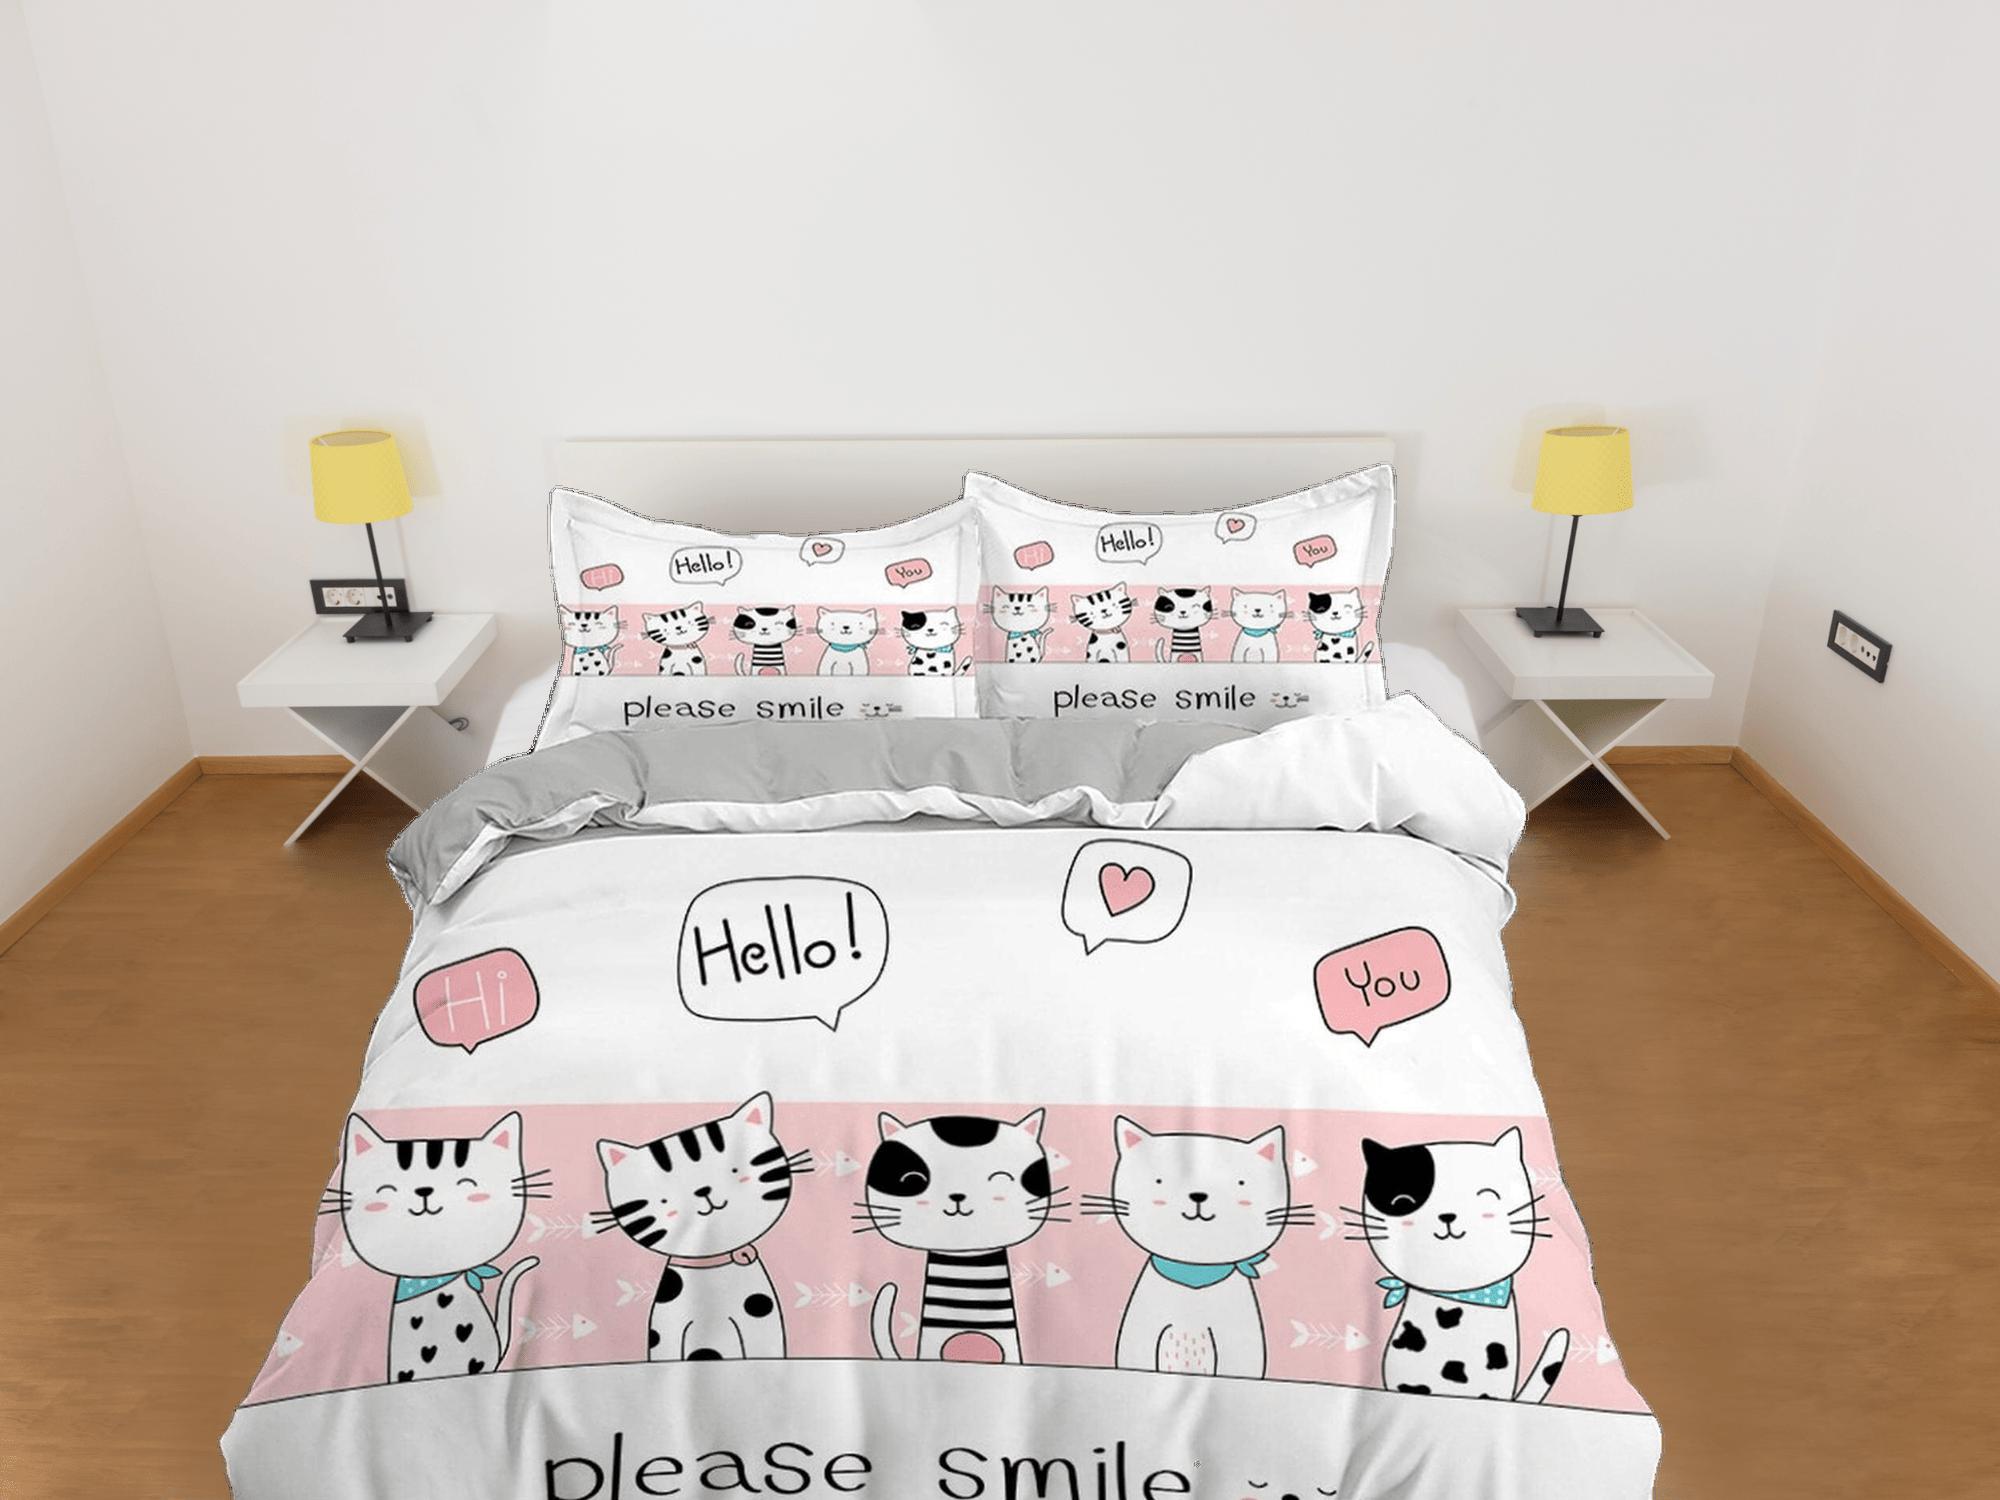 daintyduvet Please smile pink cat bedding, toddler bedding, kids duvet cover set, gift for cat lovers, baby bedding, baby shower gift